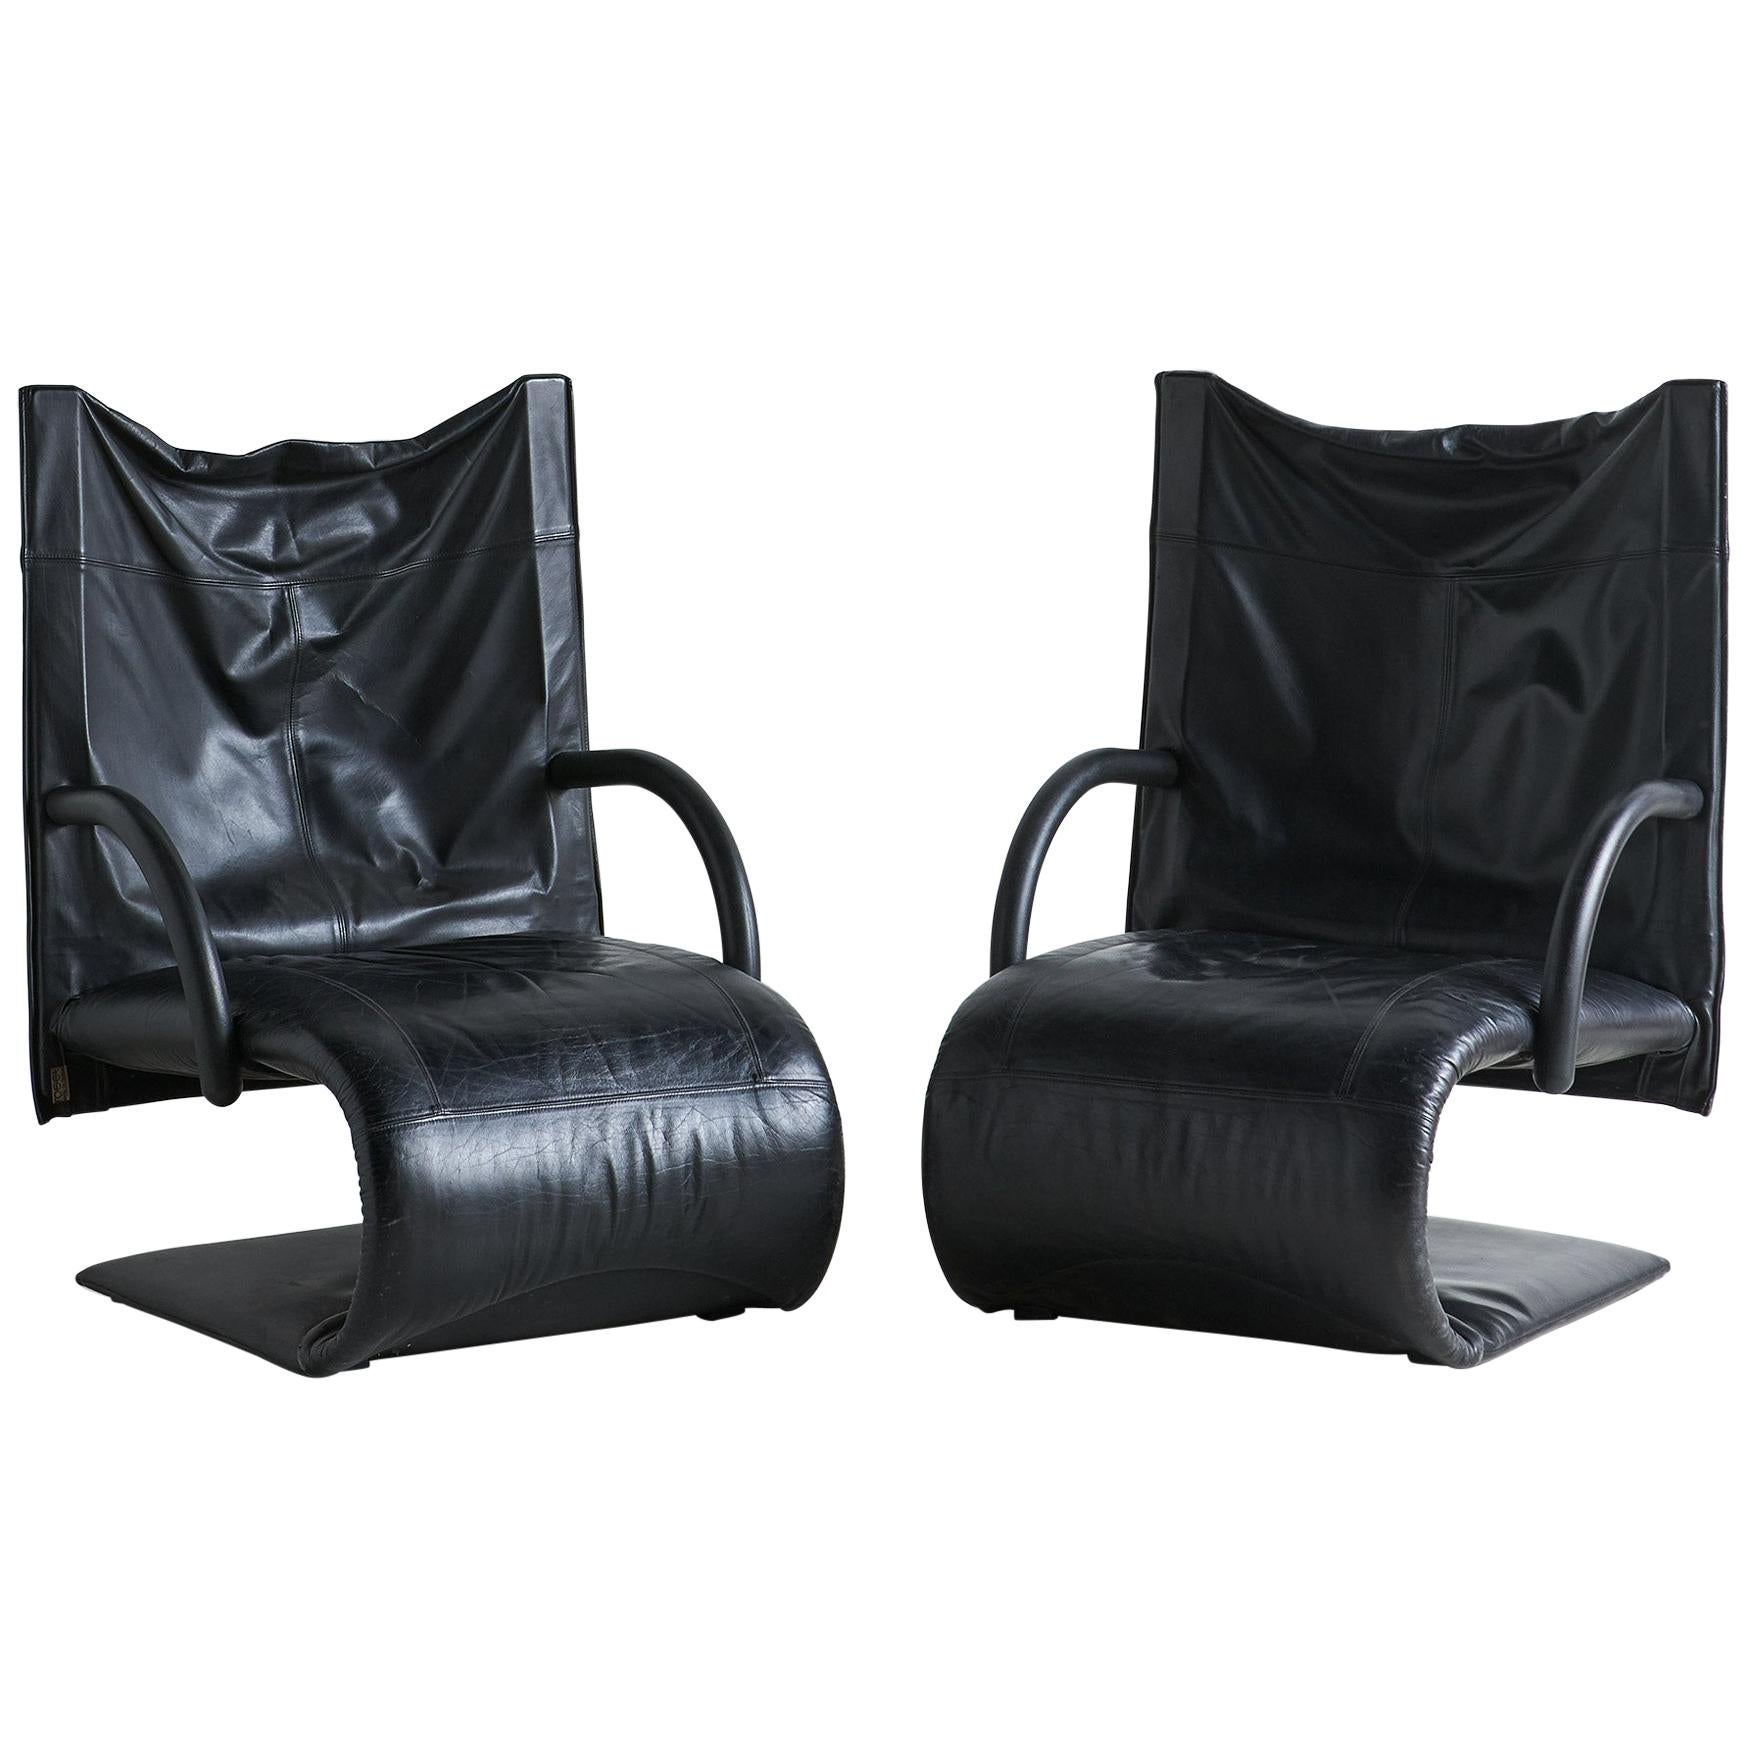 "Zen" Black Leather Chair by Claude Brisson for Lignet Roset, single